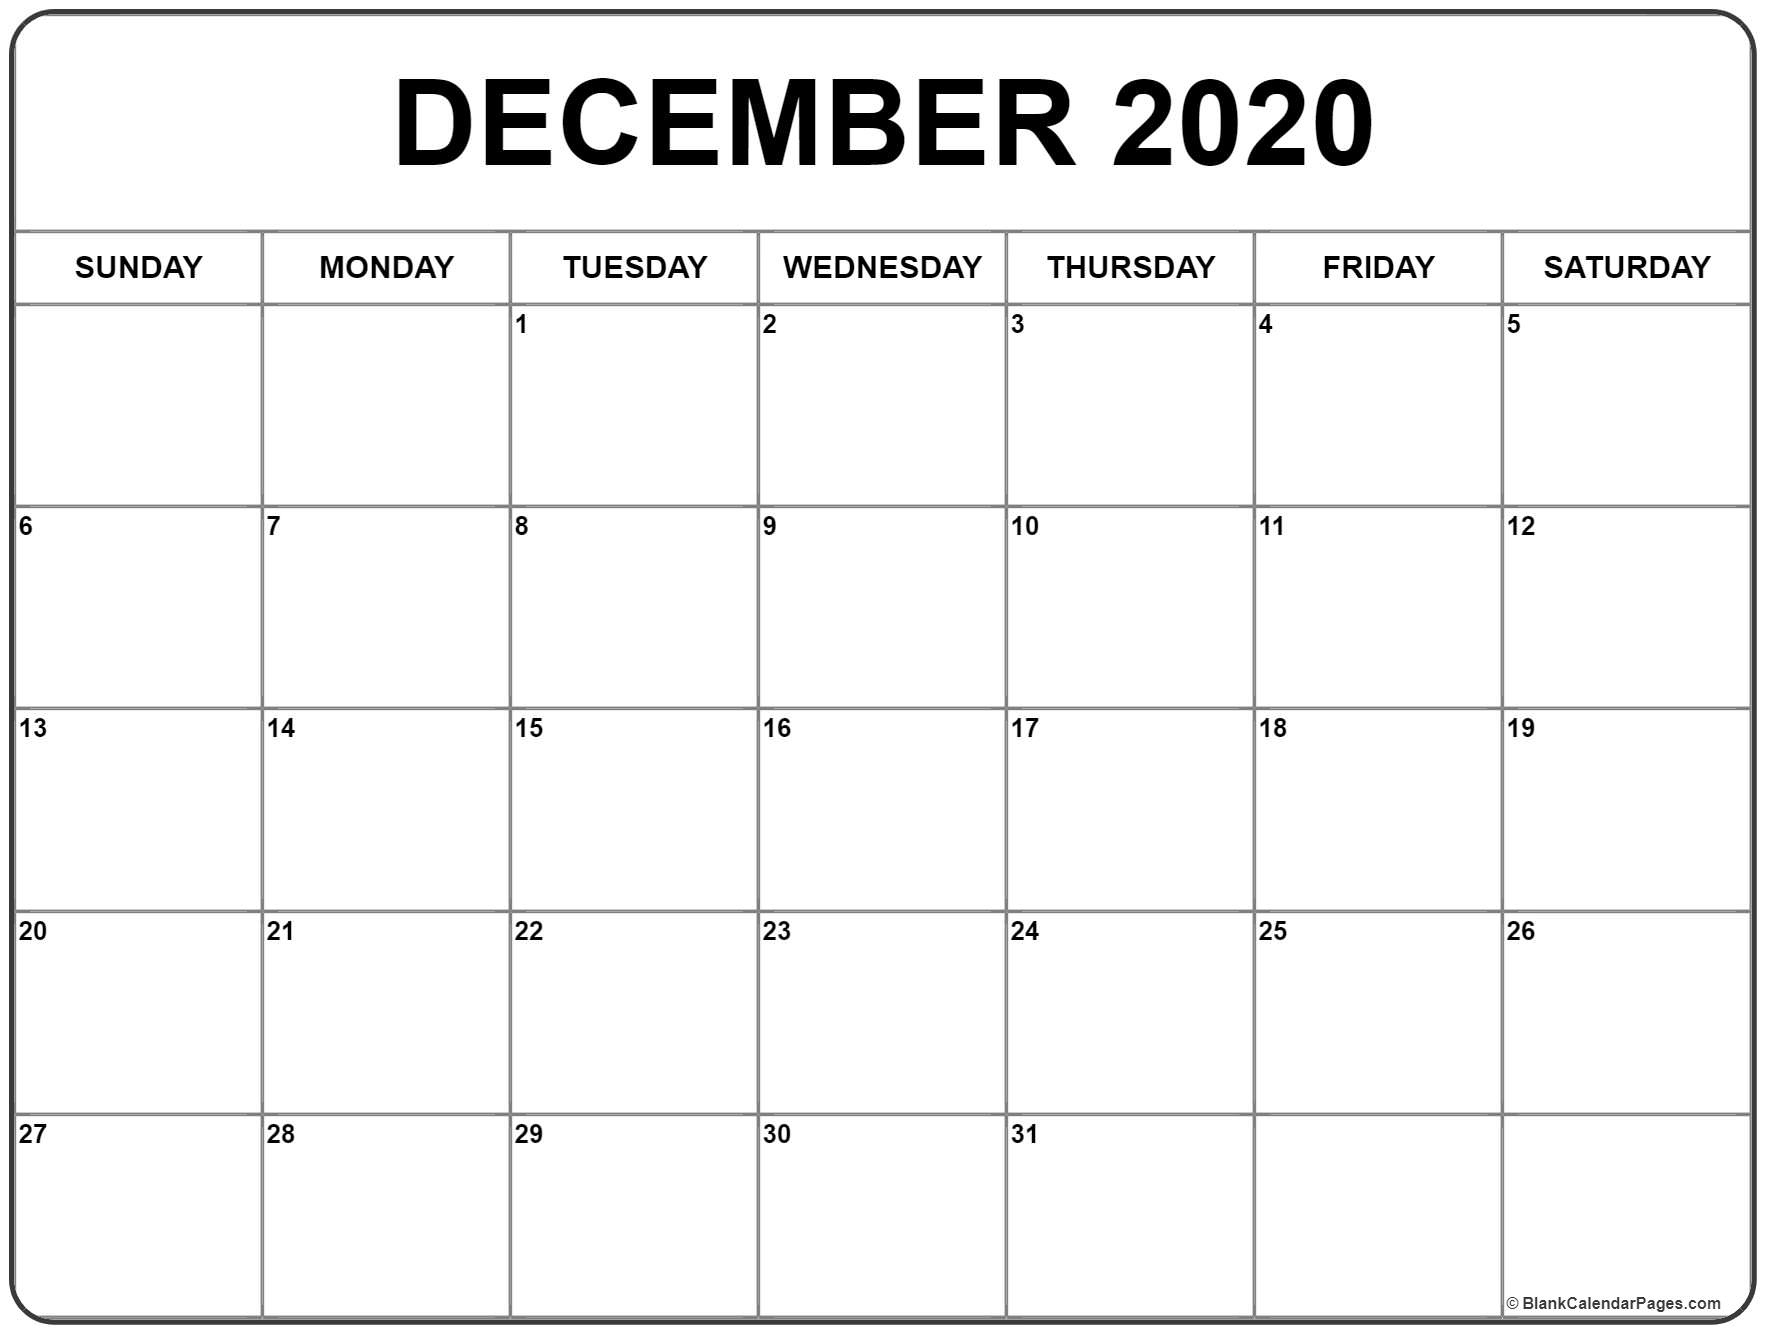 December 2020 Calendar | Free Printable Monthly Calendars Dashing 2020 Calendar For December